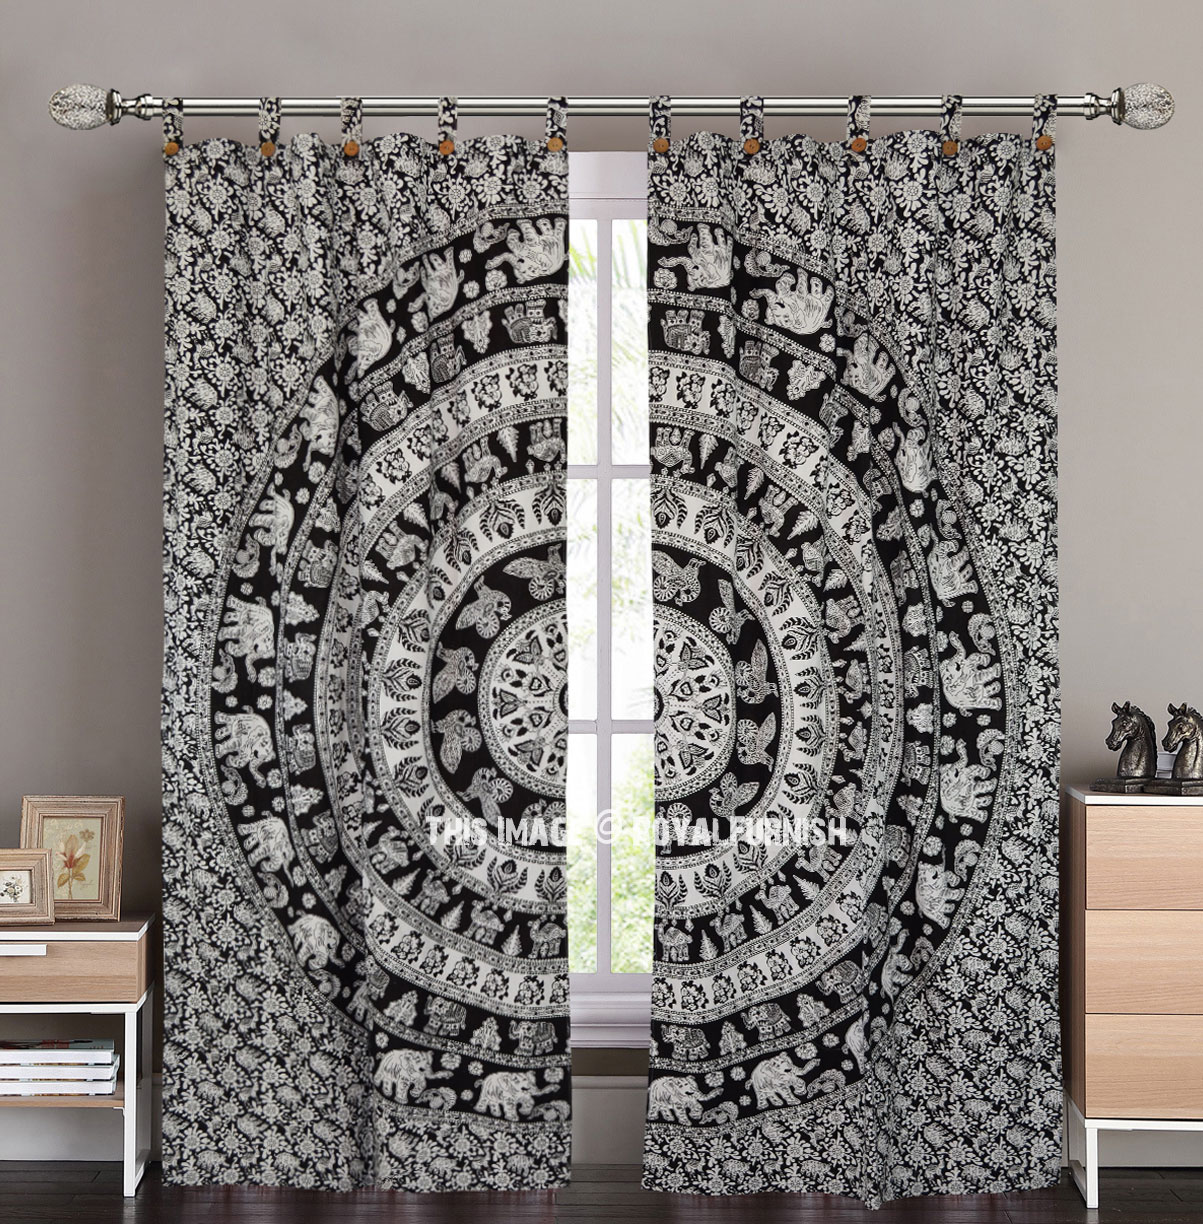 Indian Yin Yang Mandala Tapestry Curtain 2 Valances Drape Panel Decor Curtain 